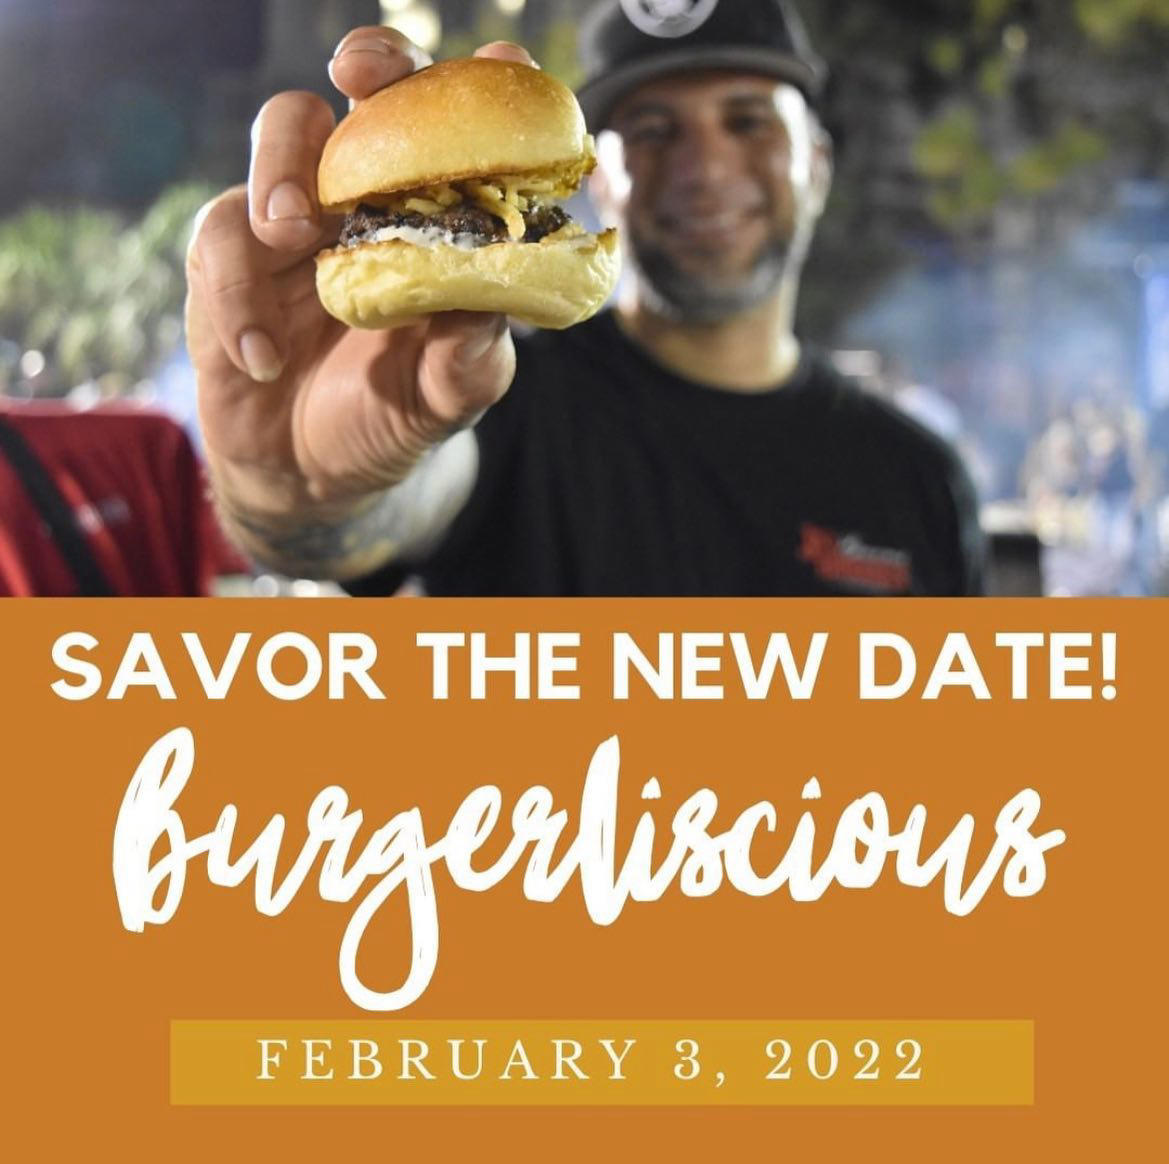 Burgerliscious - SAVOR THE NEW DATE - Thursday, February 3, 2022